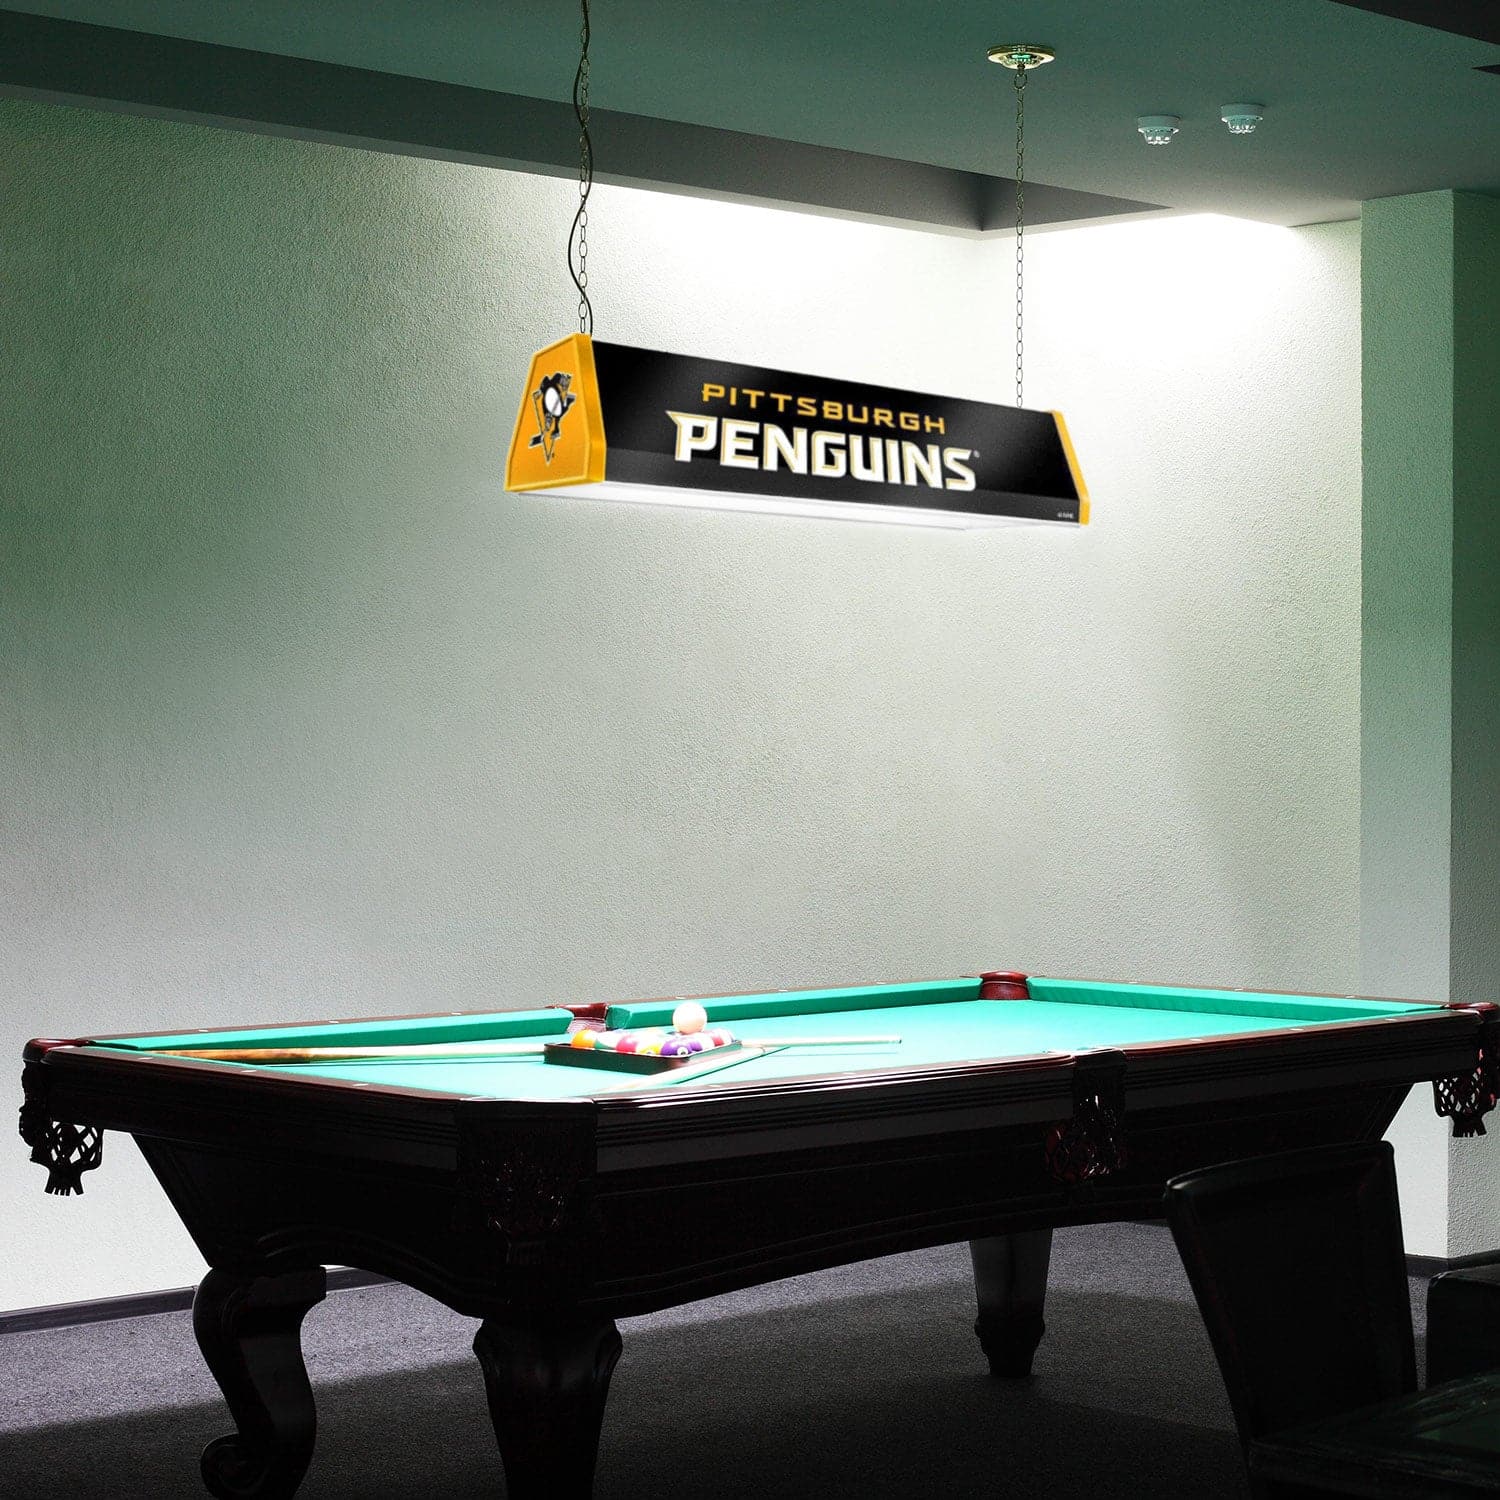 Pittsburgh Penguins: Standard Pool Table Light - The Fan-Brand